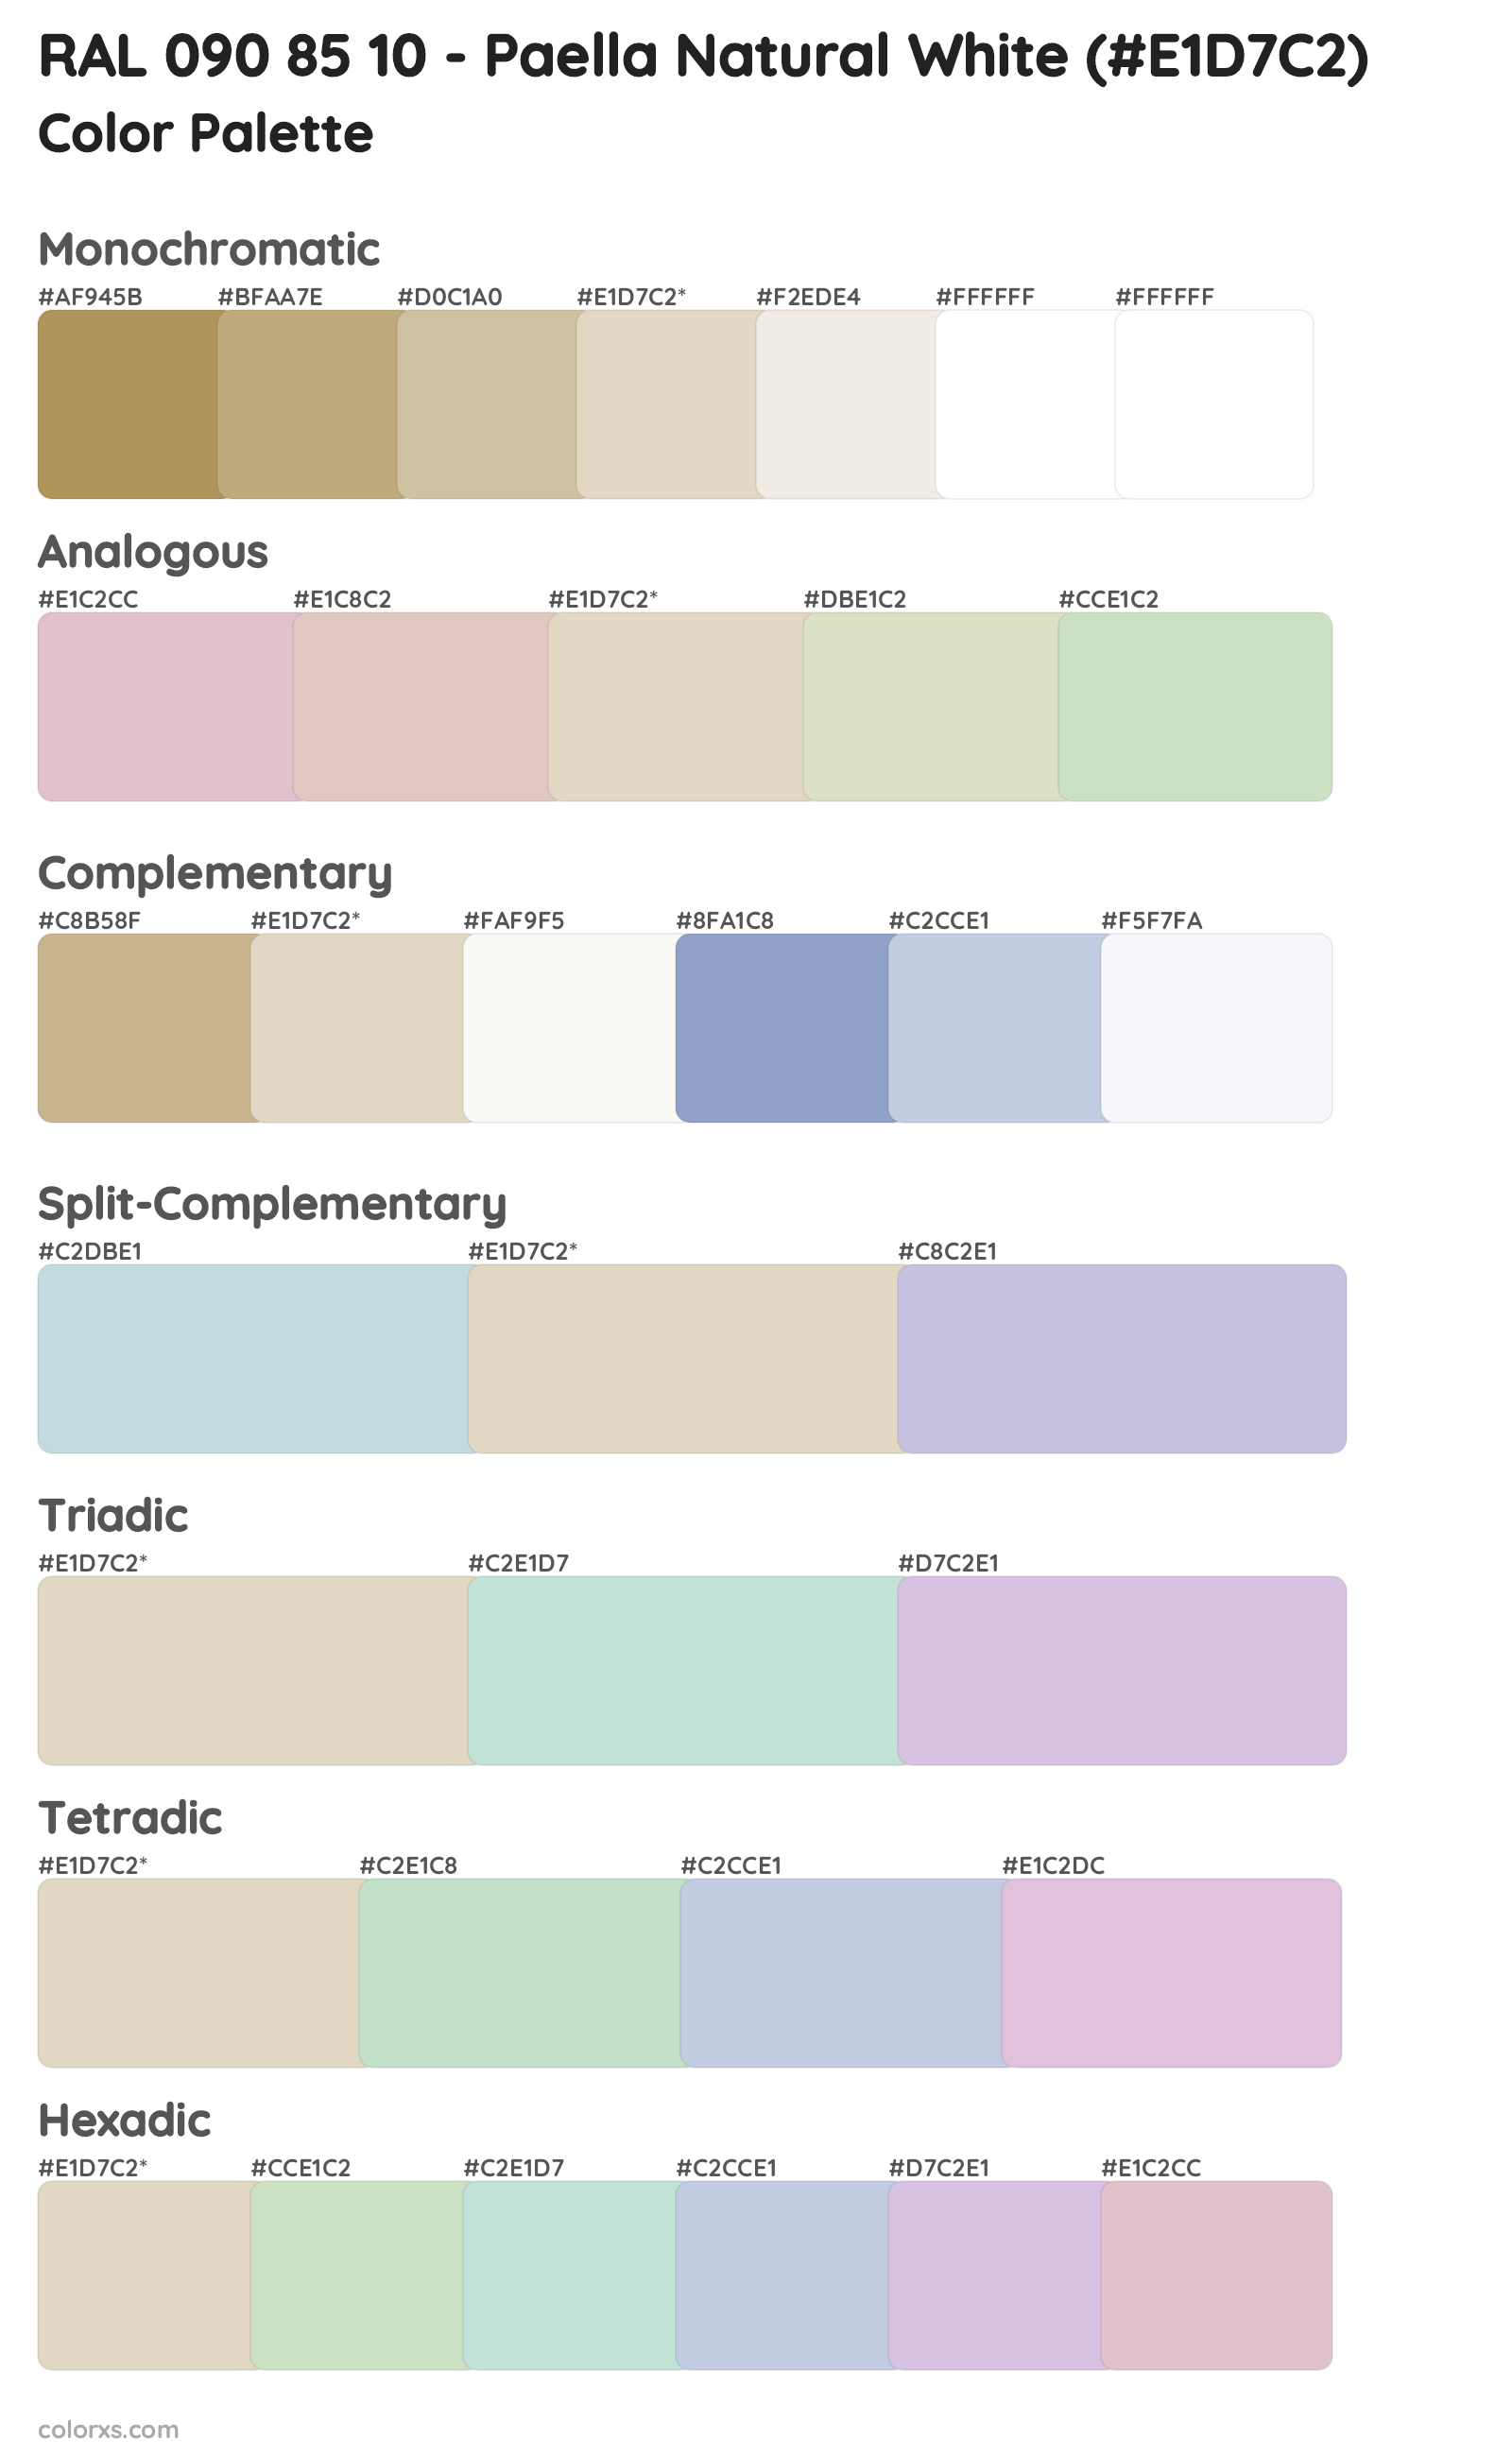 RAL 090 85 10 - Paella Natural White Color Scheme Palettes